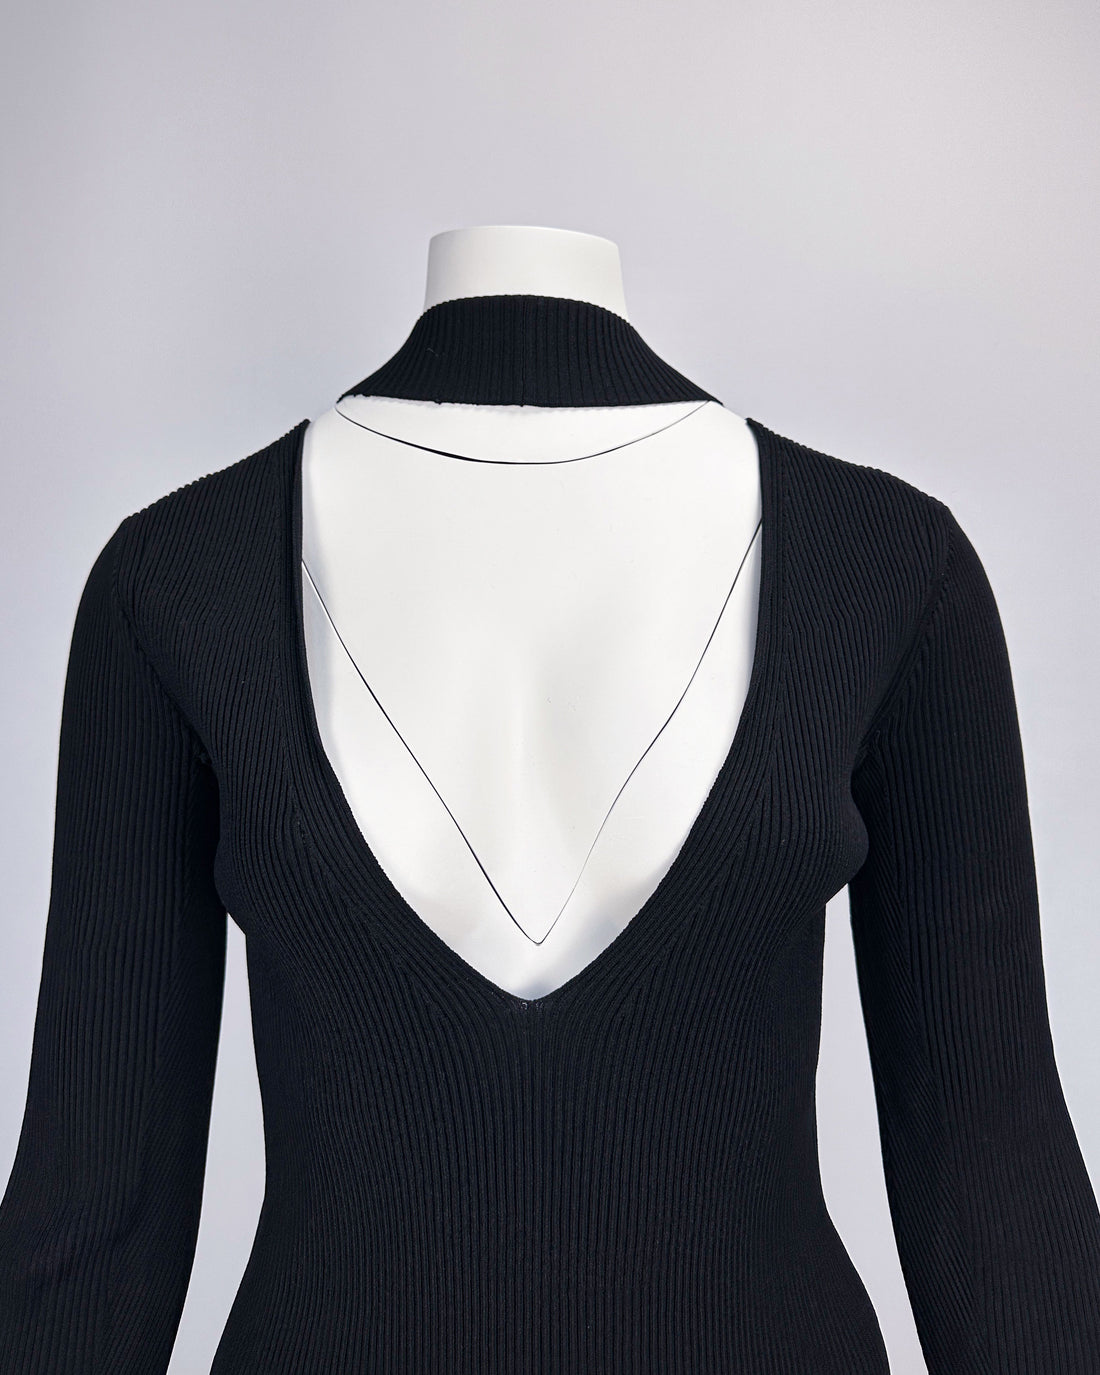 Helmut Lang Black Knit Dress 2000's